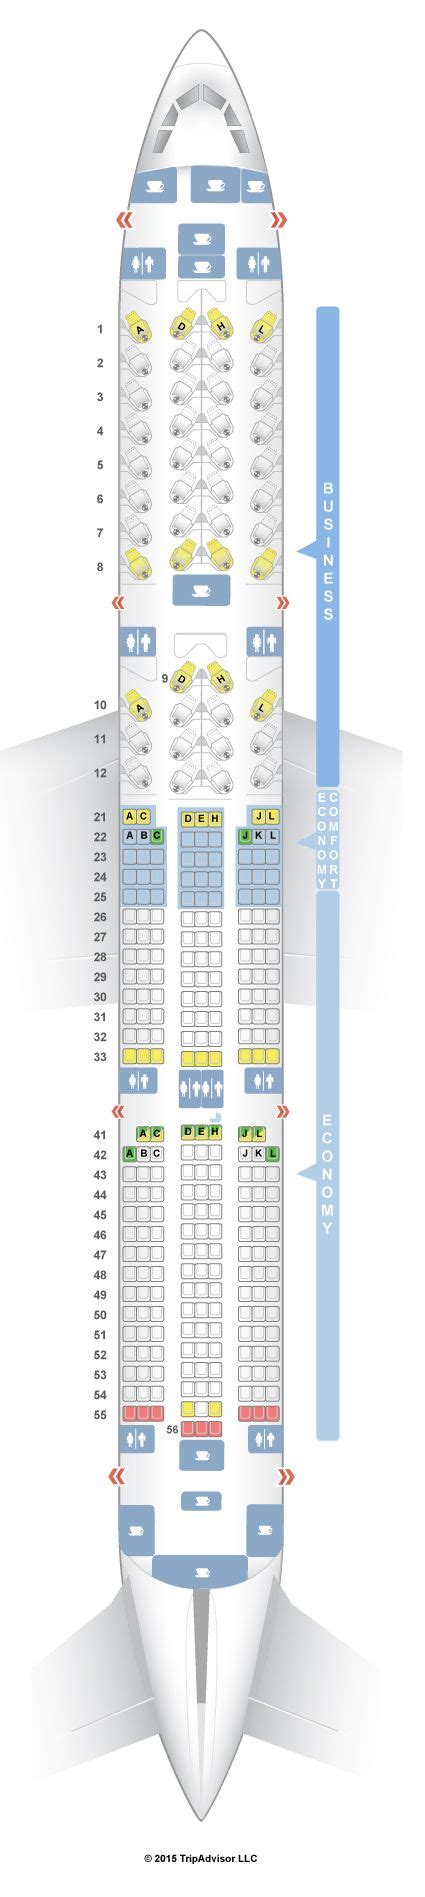 Airbus A350 900 Seating Chart Malayqoqo